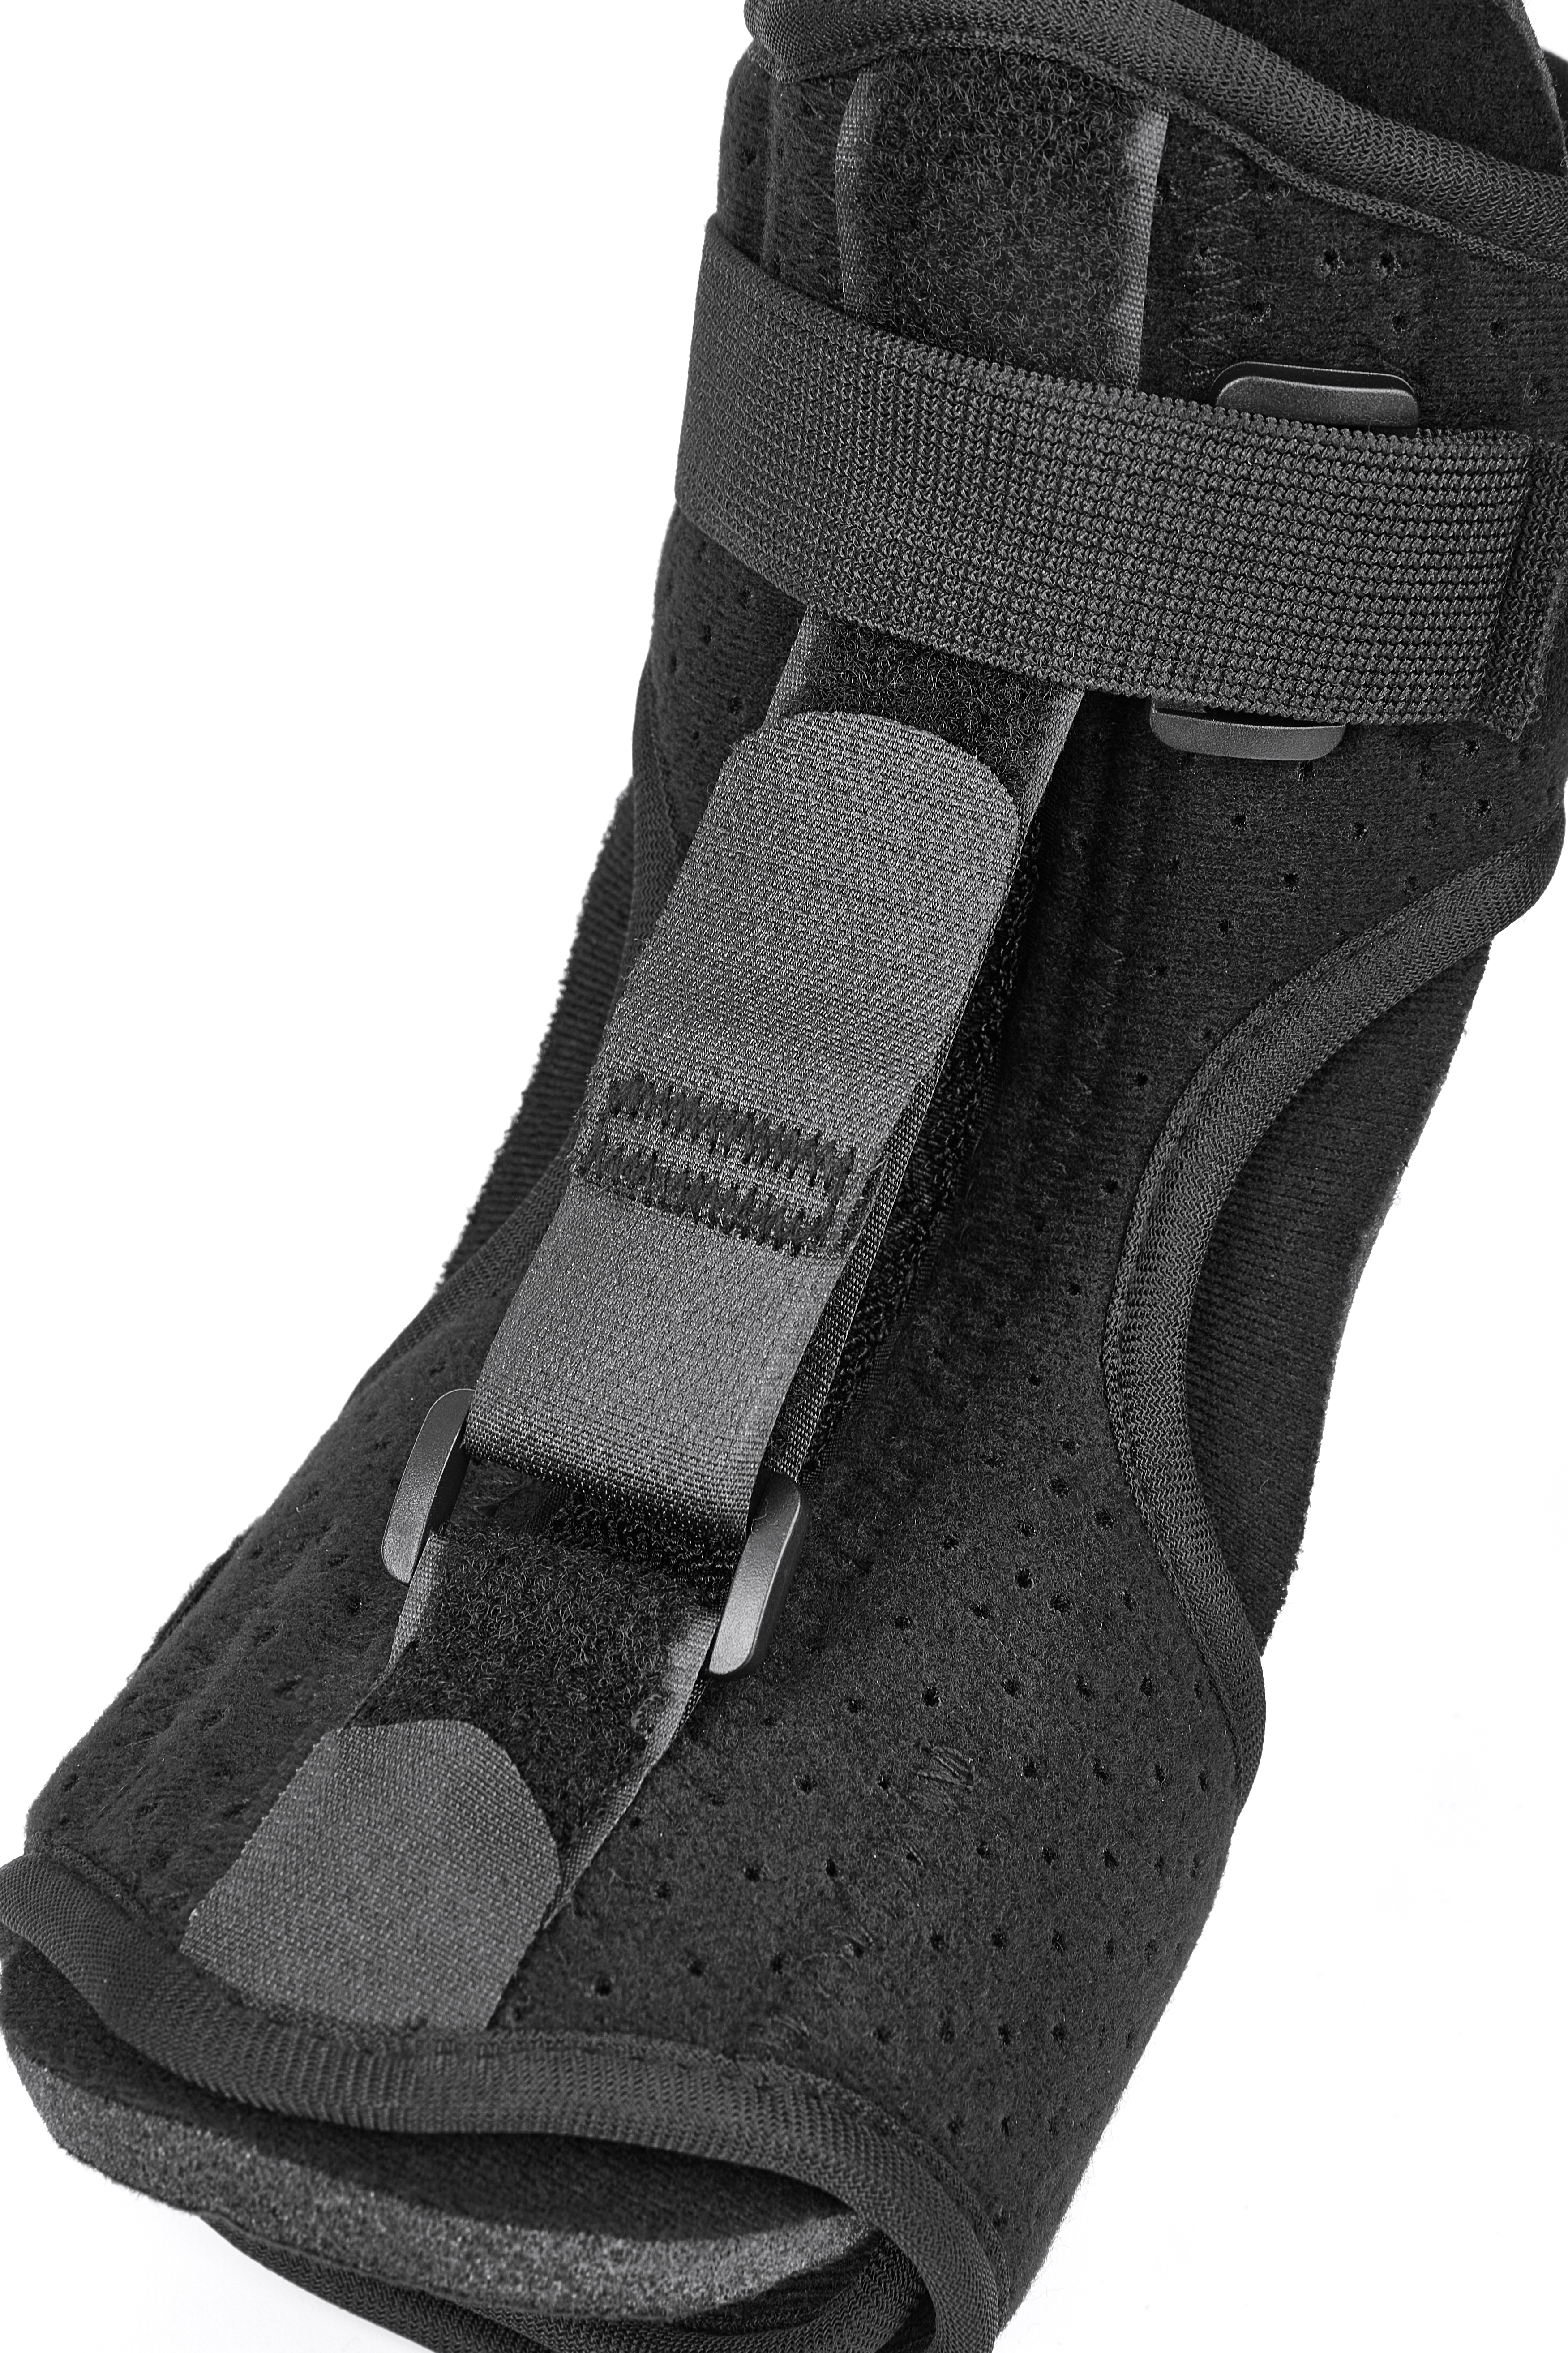 Wholesale Medical Orthosis Foot Drop Orthotic Brace Manufacturer